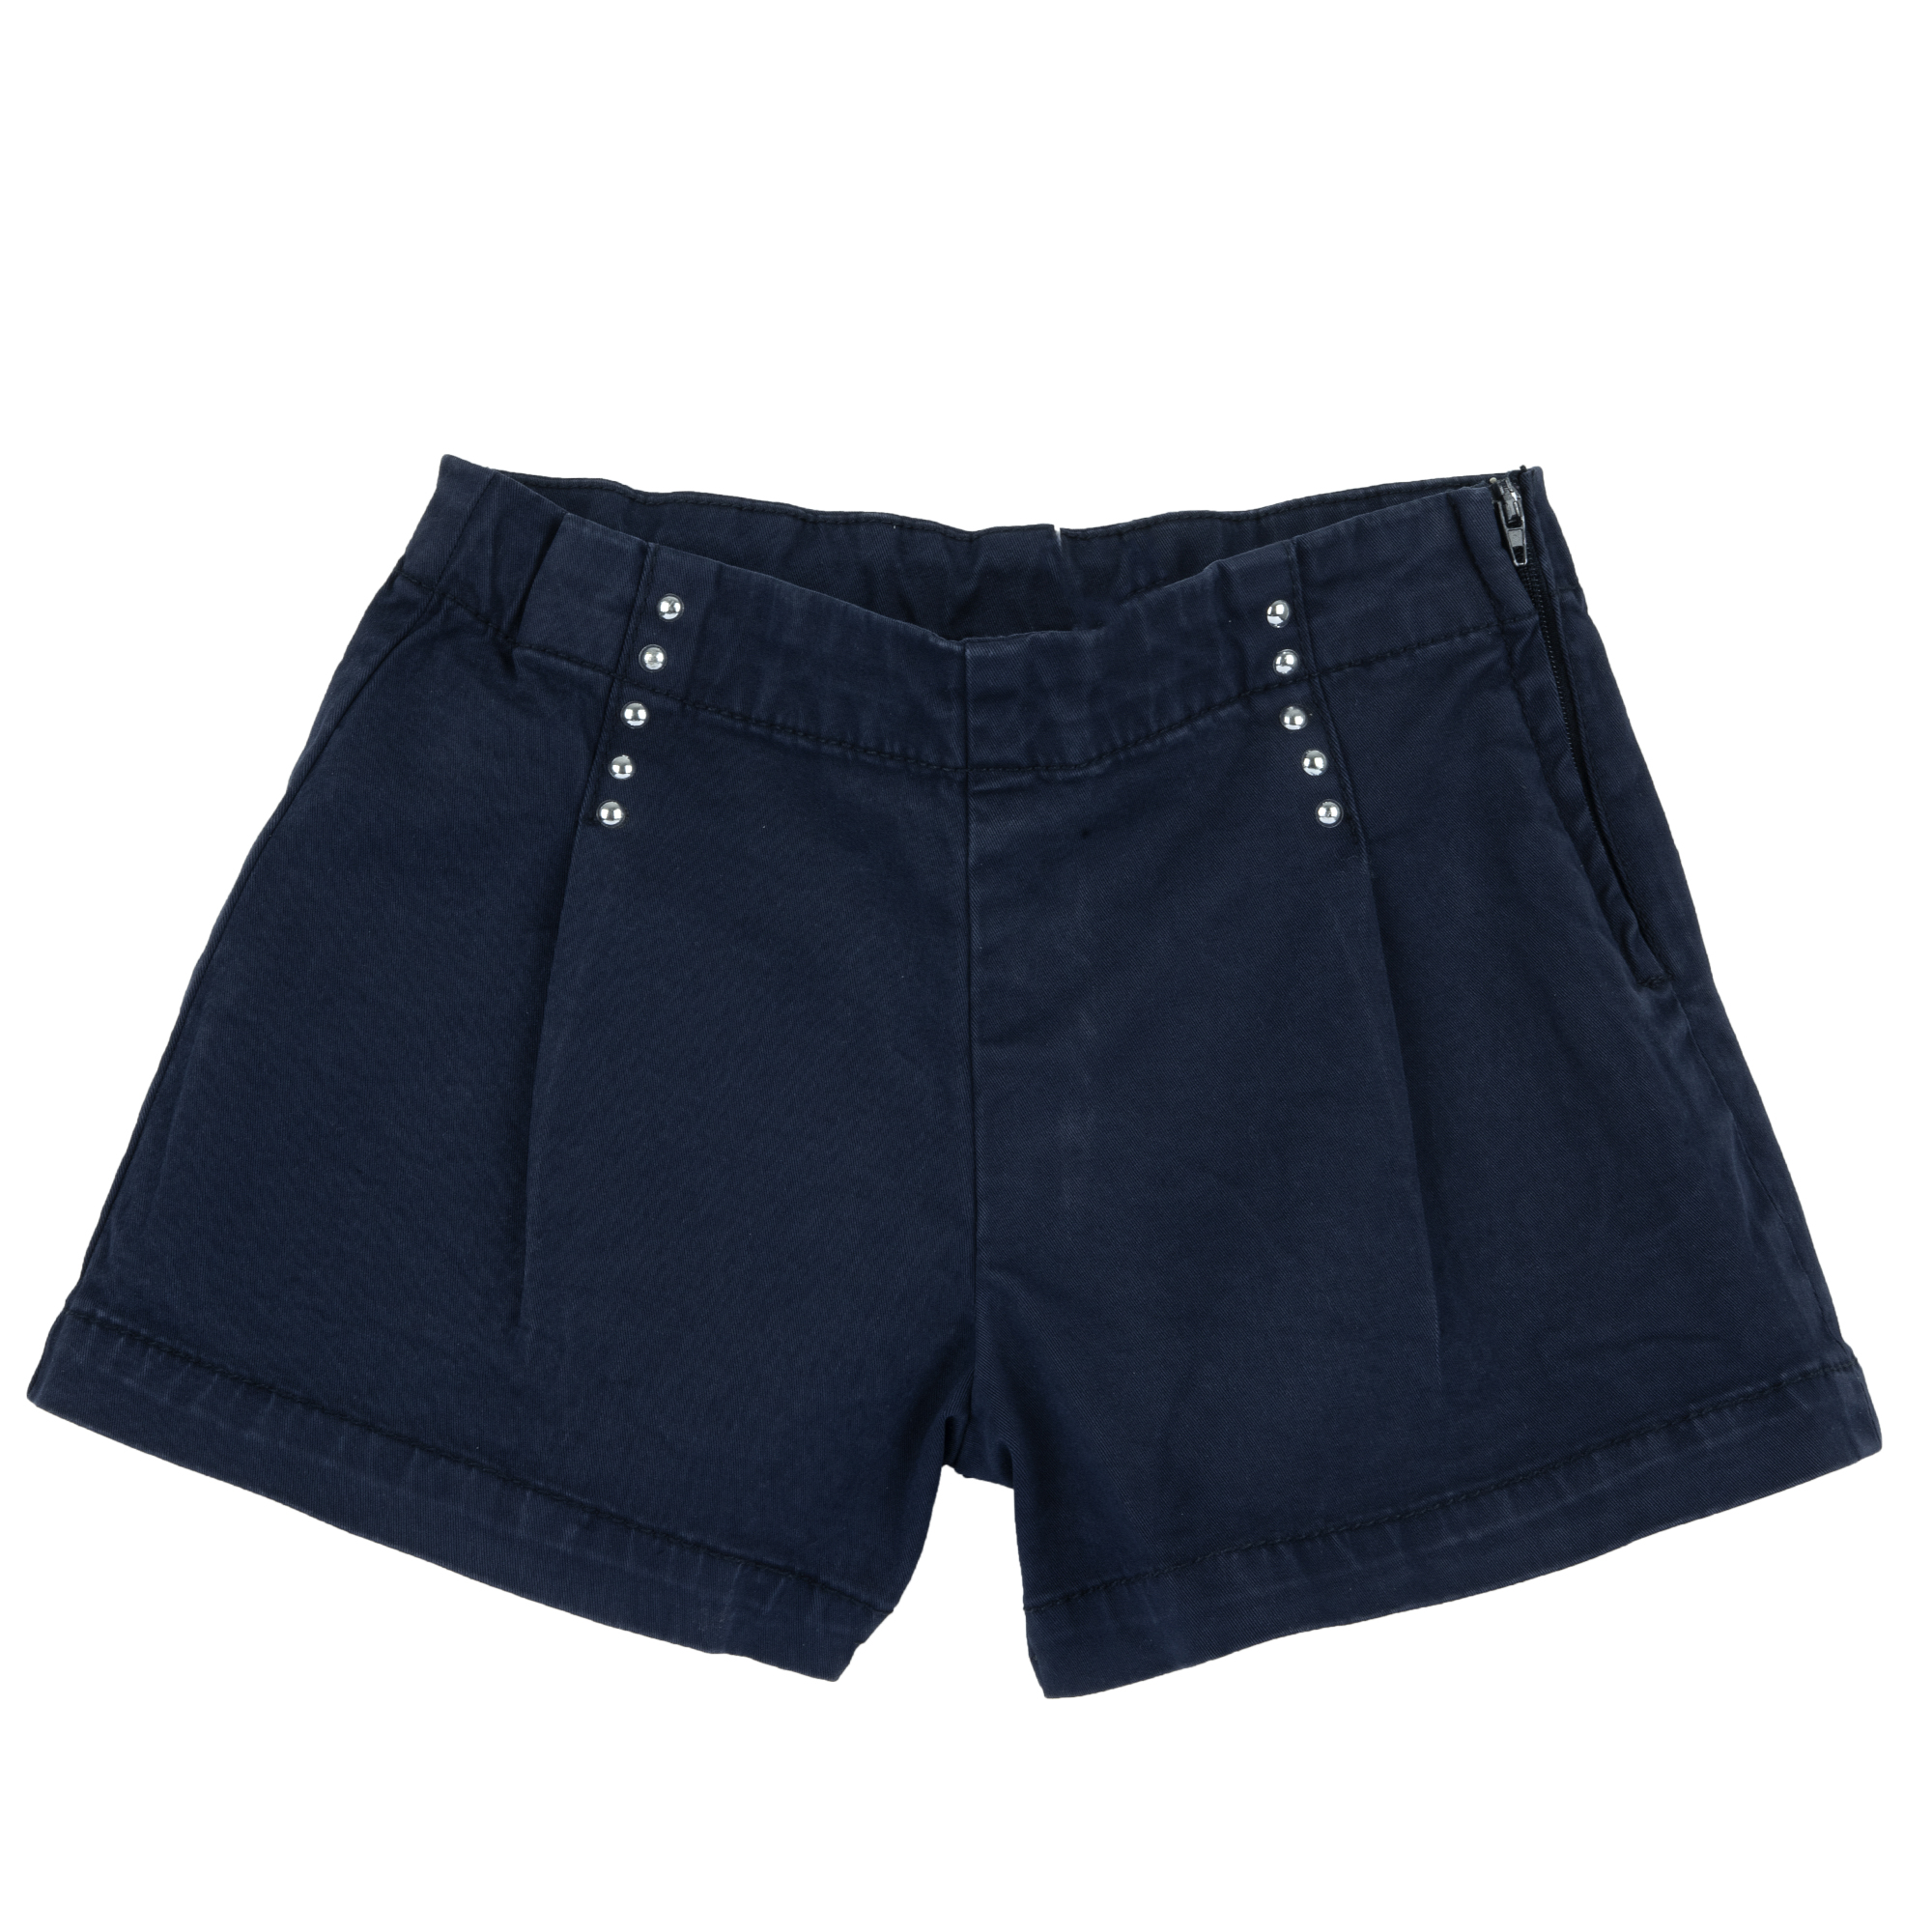 Pantaloni Copii Chicco Twill, Albastru, 00577-64mc